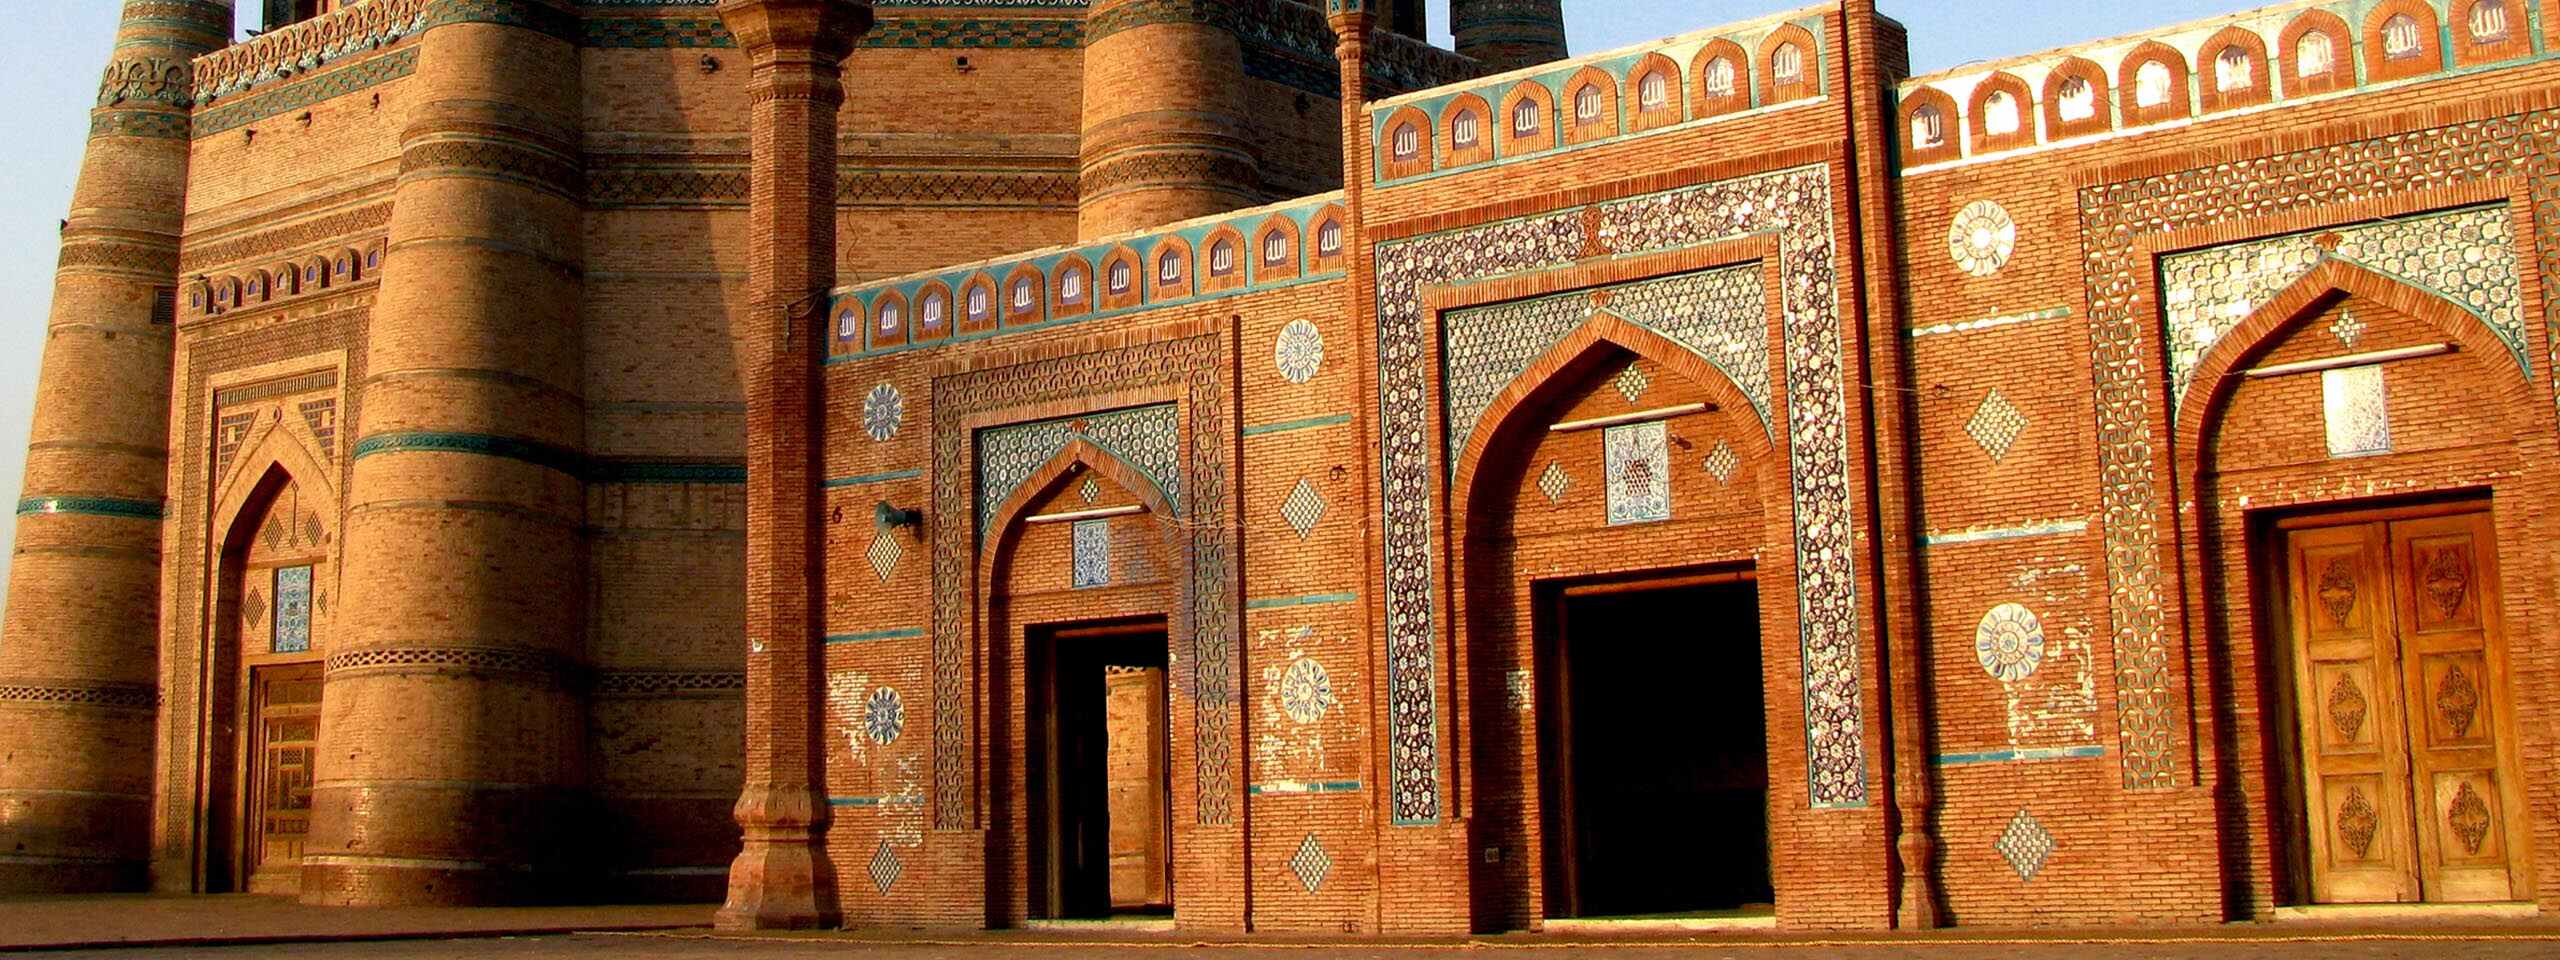 Tomb of Shah Rukn-e-Alam, Multan, Punjab, Pakistan